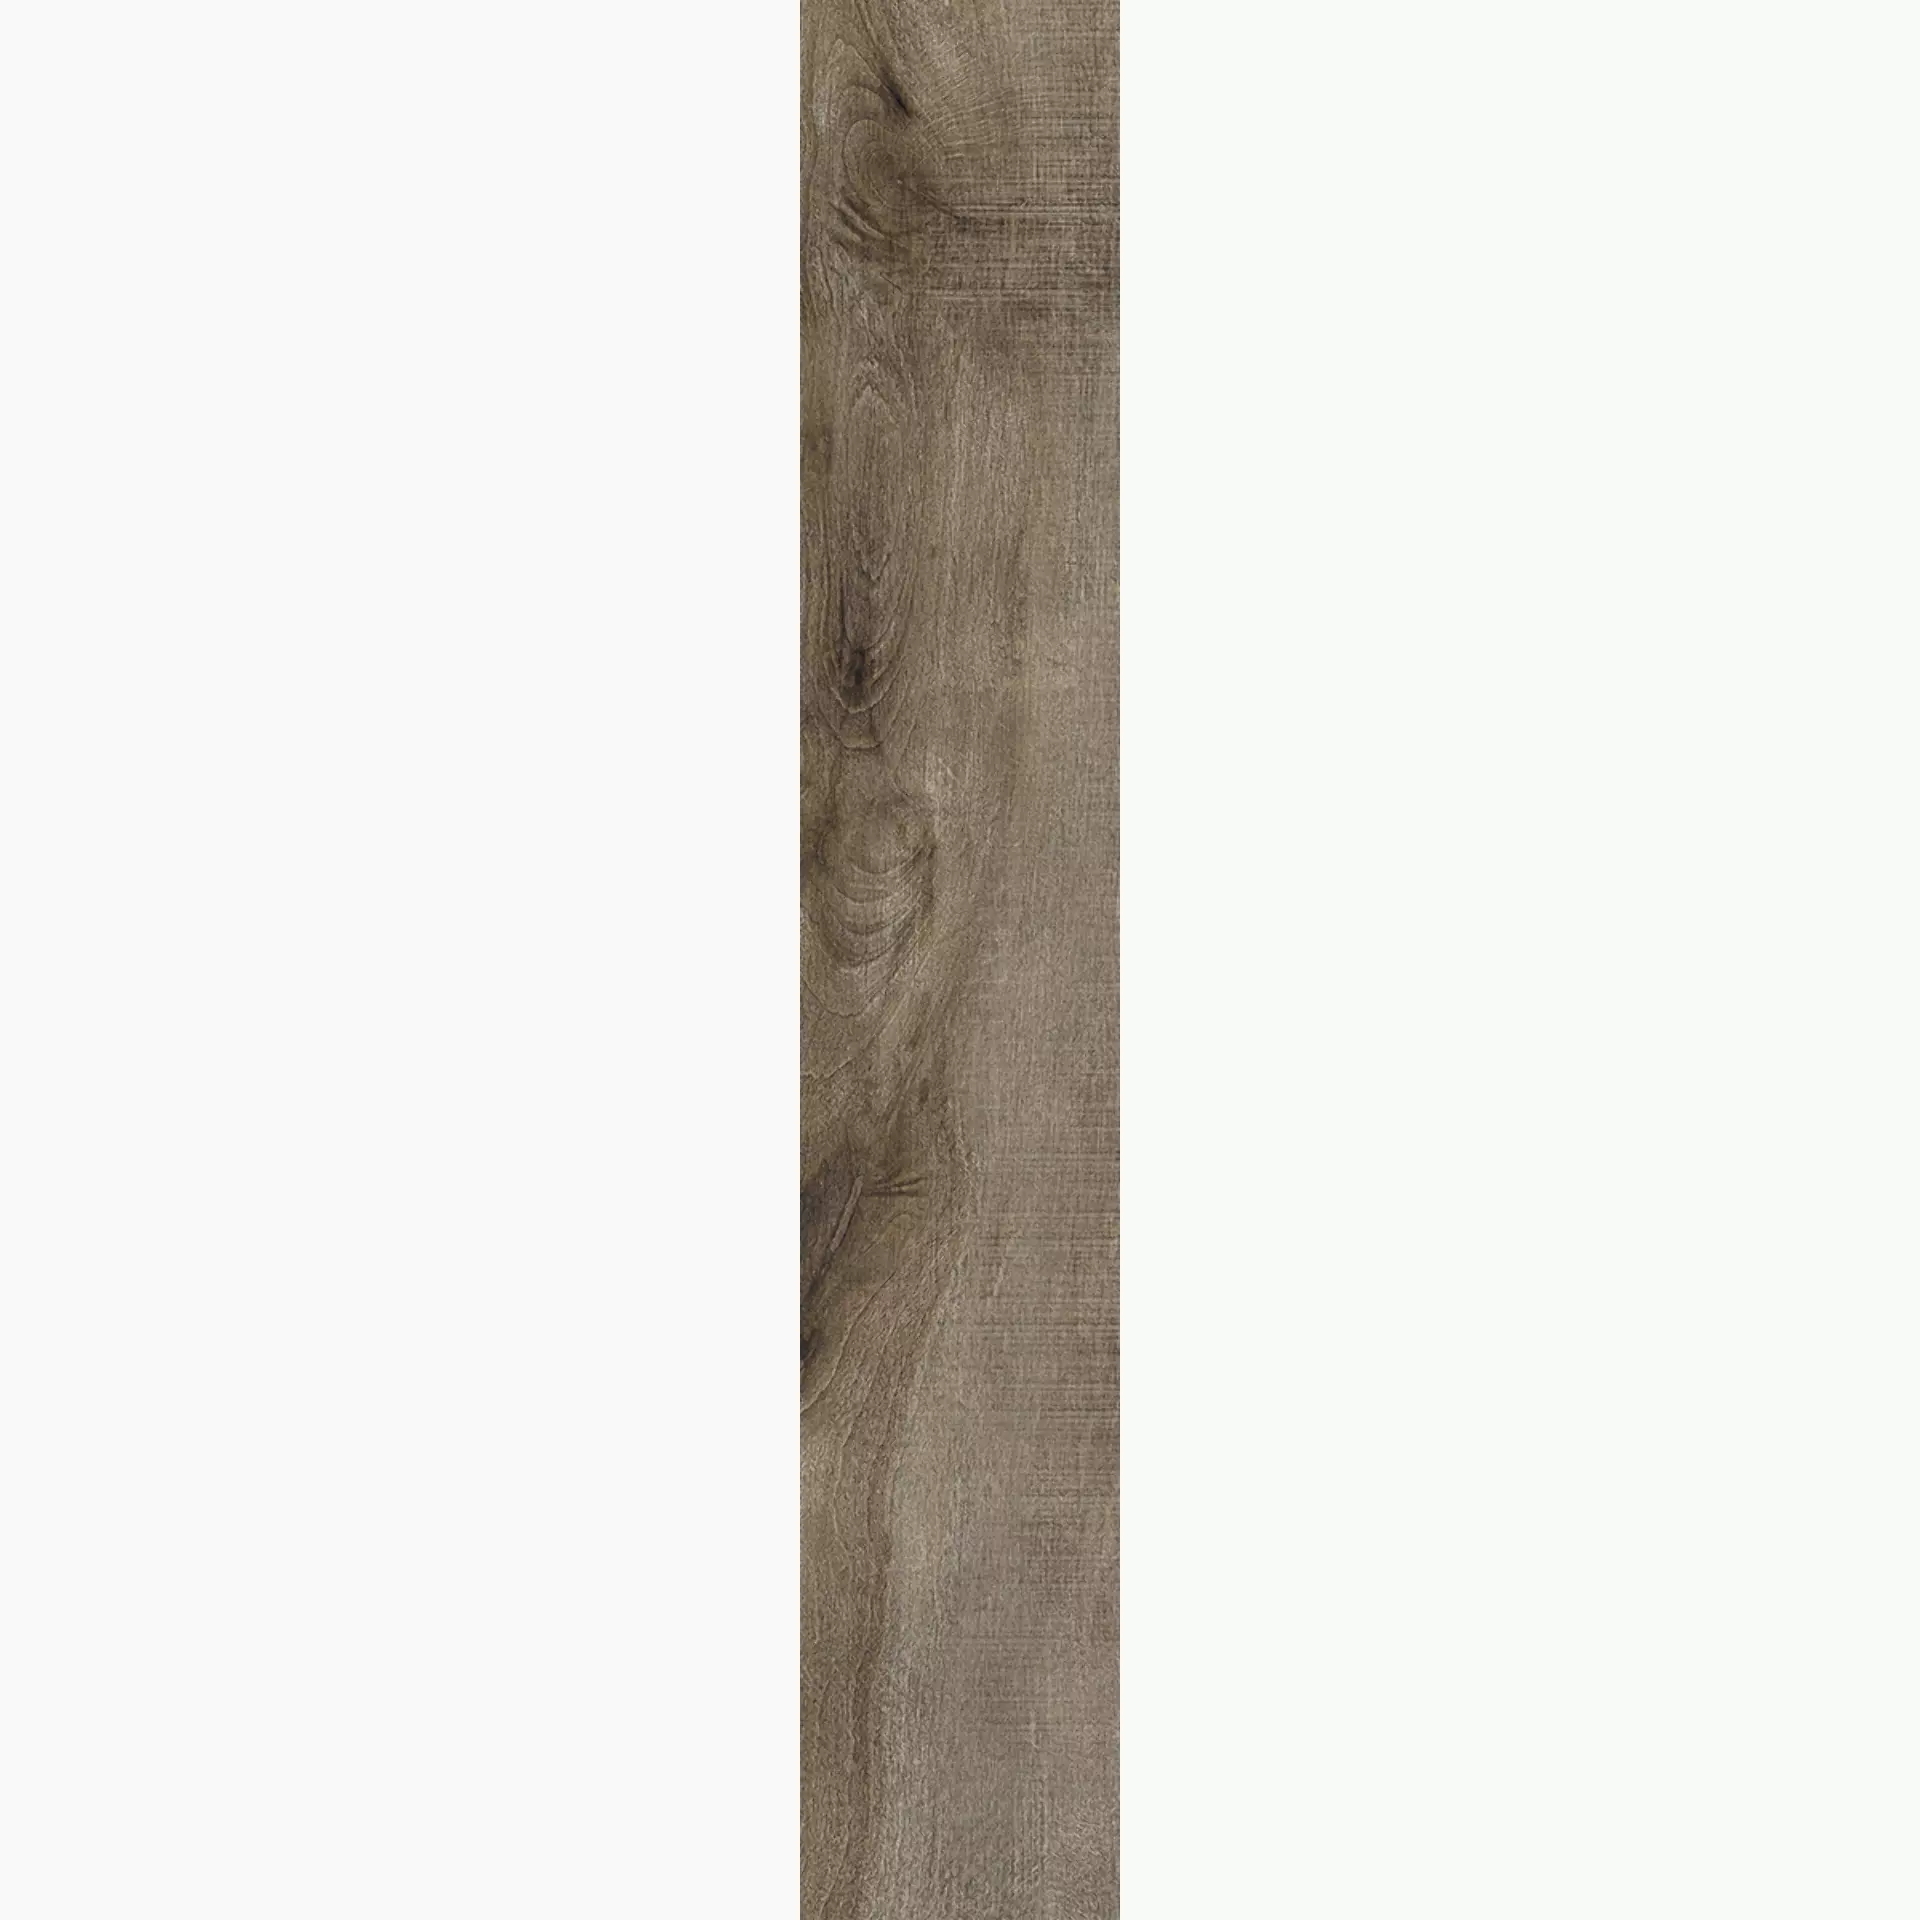 Rondine Greenwood Greige Naturale J86333 7,5x45cm 9,5mm